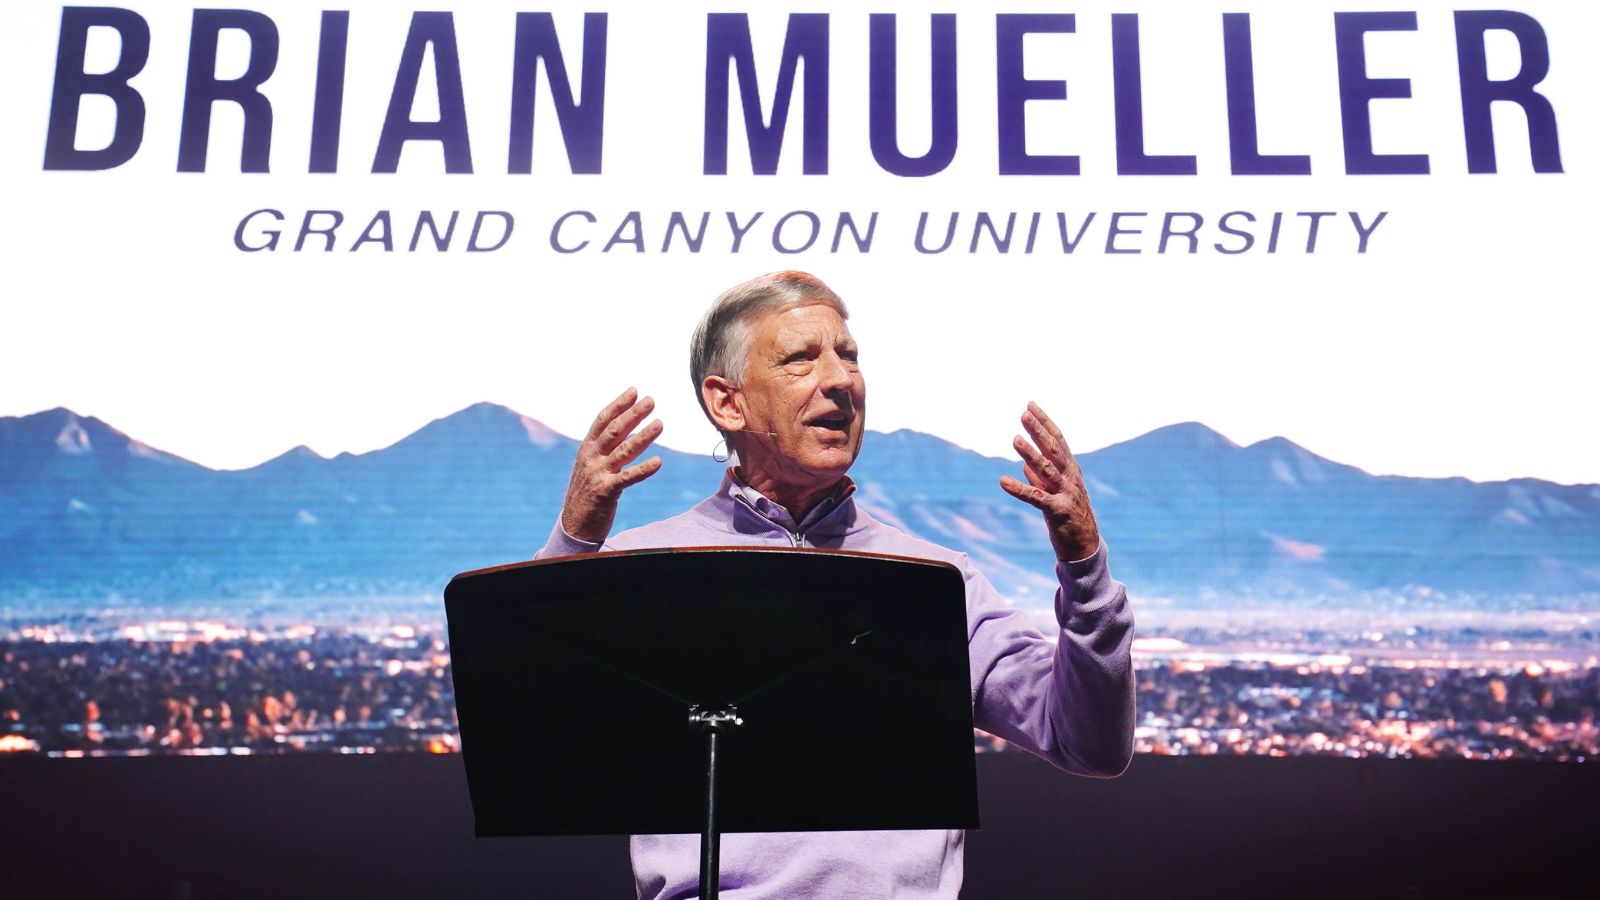 Grand Canyon University President Brian Mueller